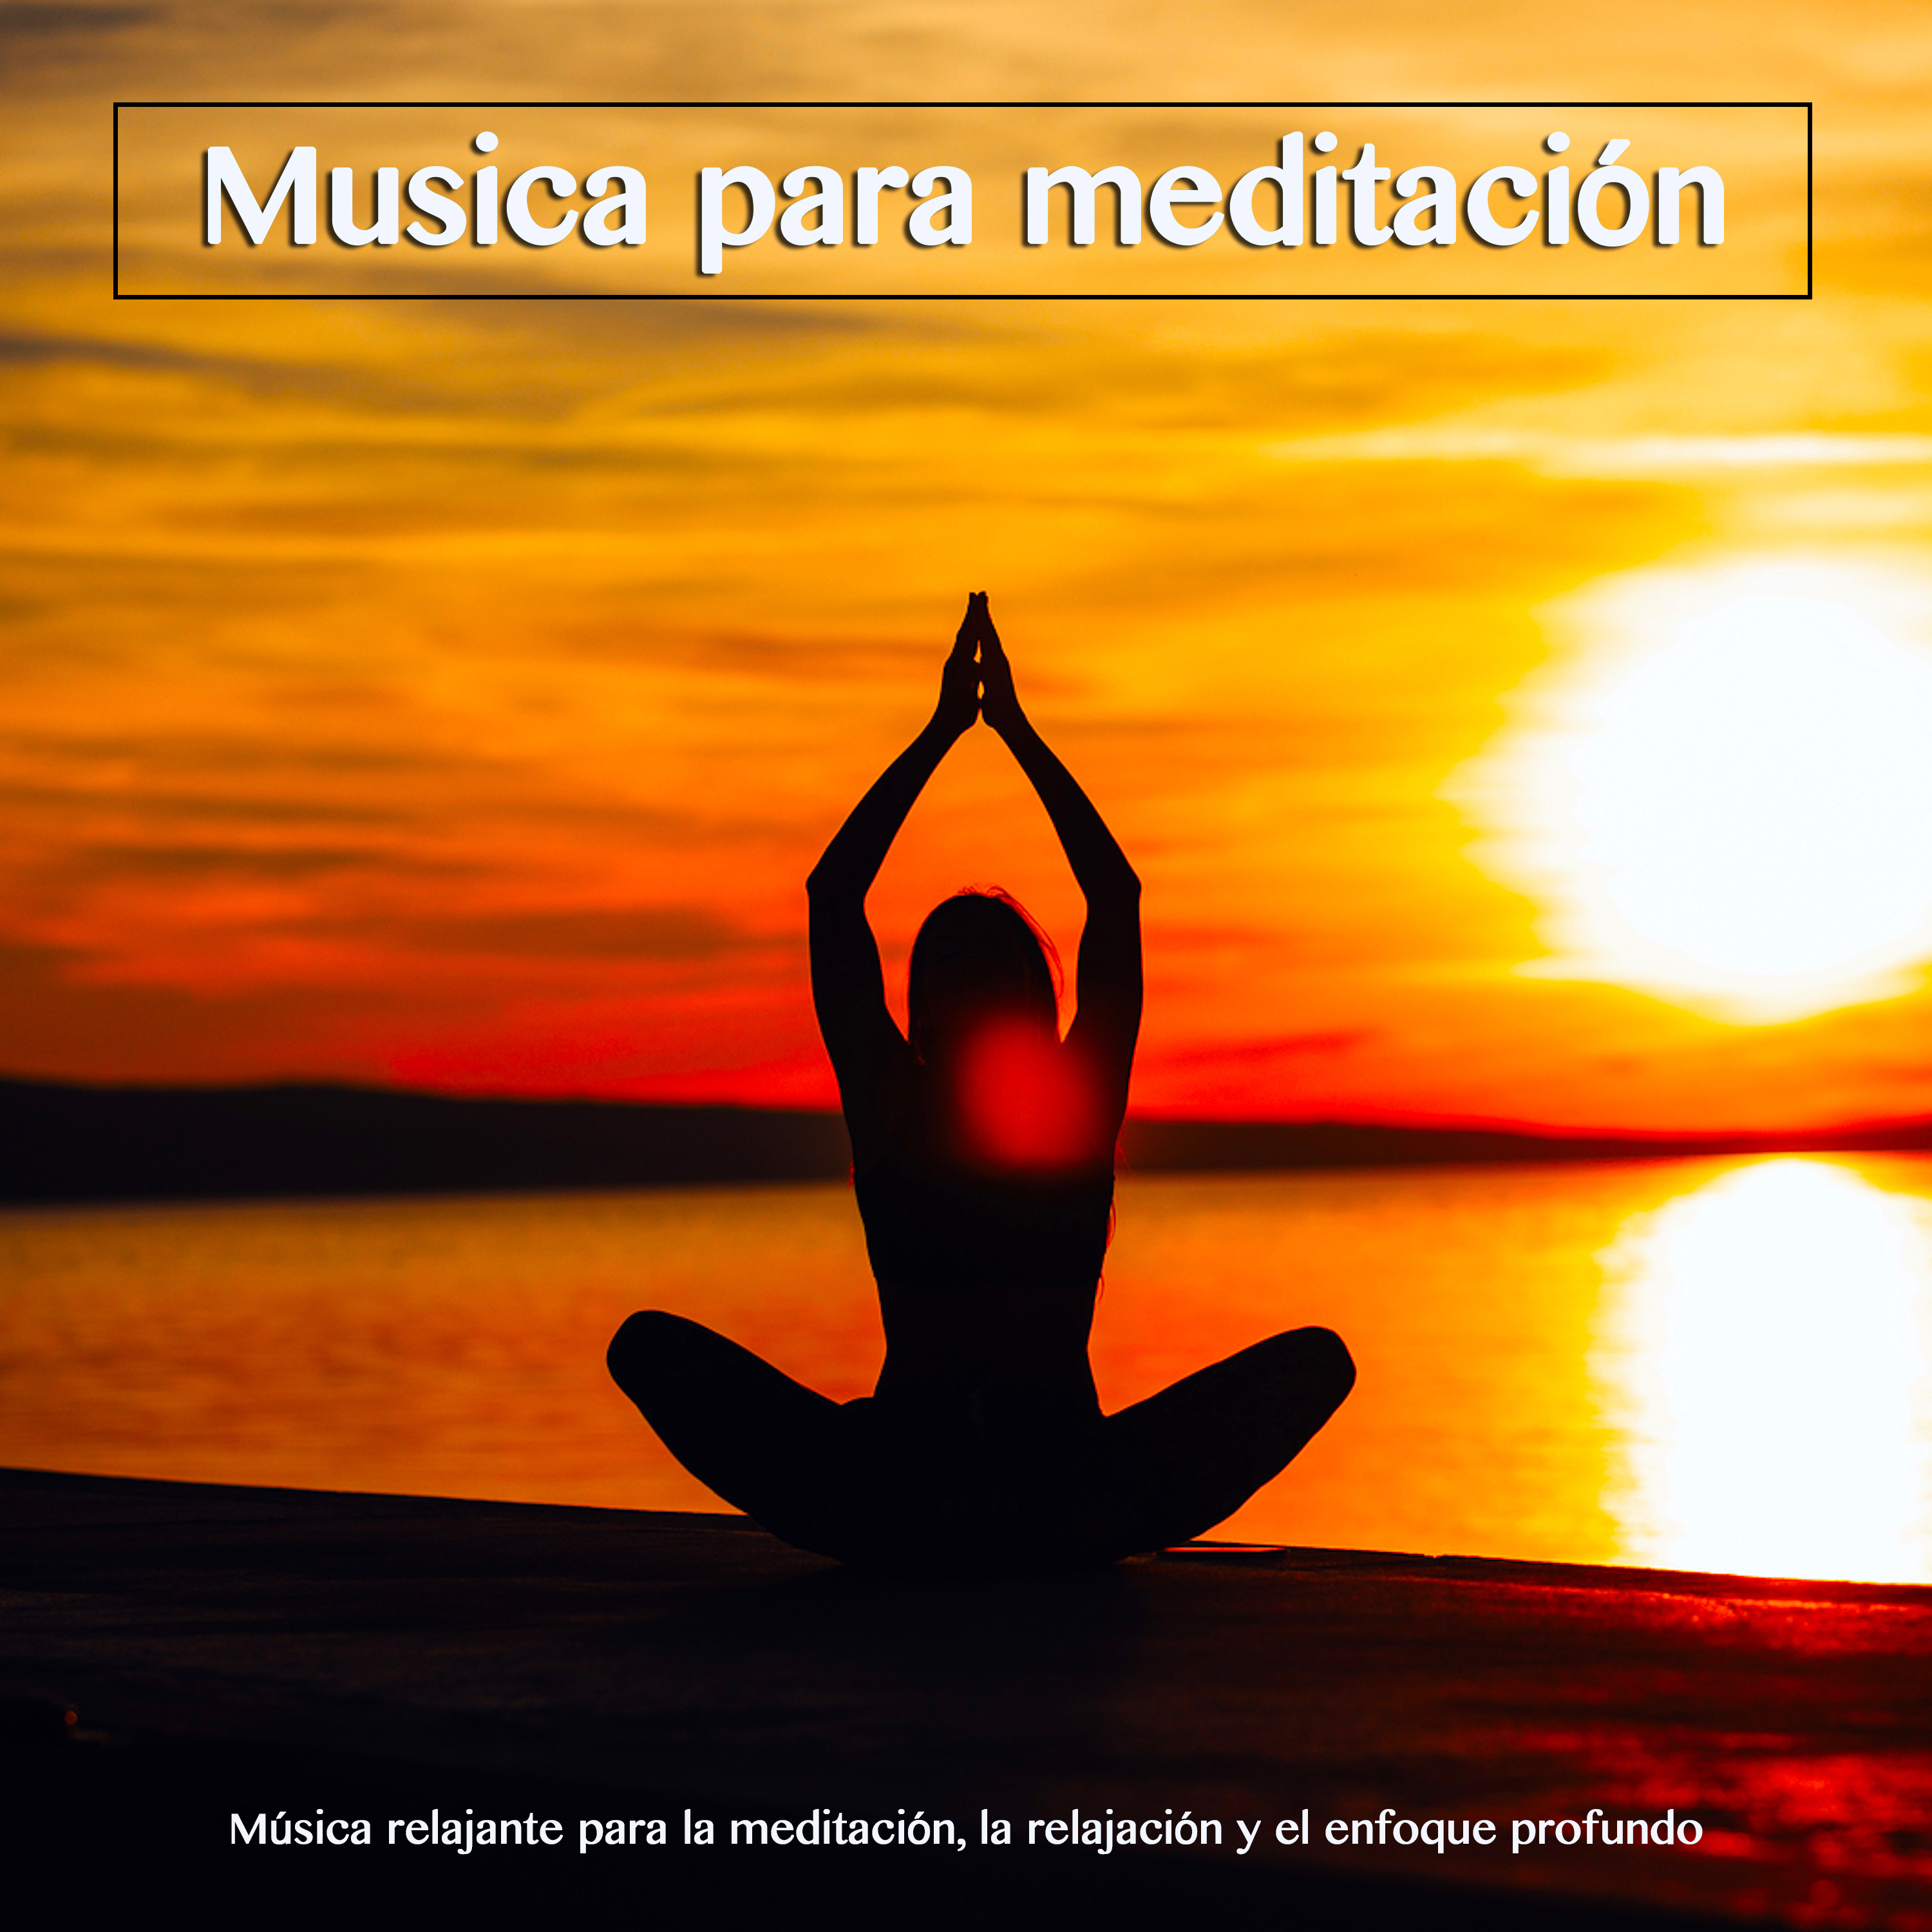 Musica para meditacio n: Mu sica relajante para la meditacio n, la relajacio n y el enfoque profundo